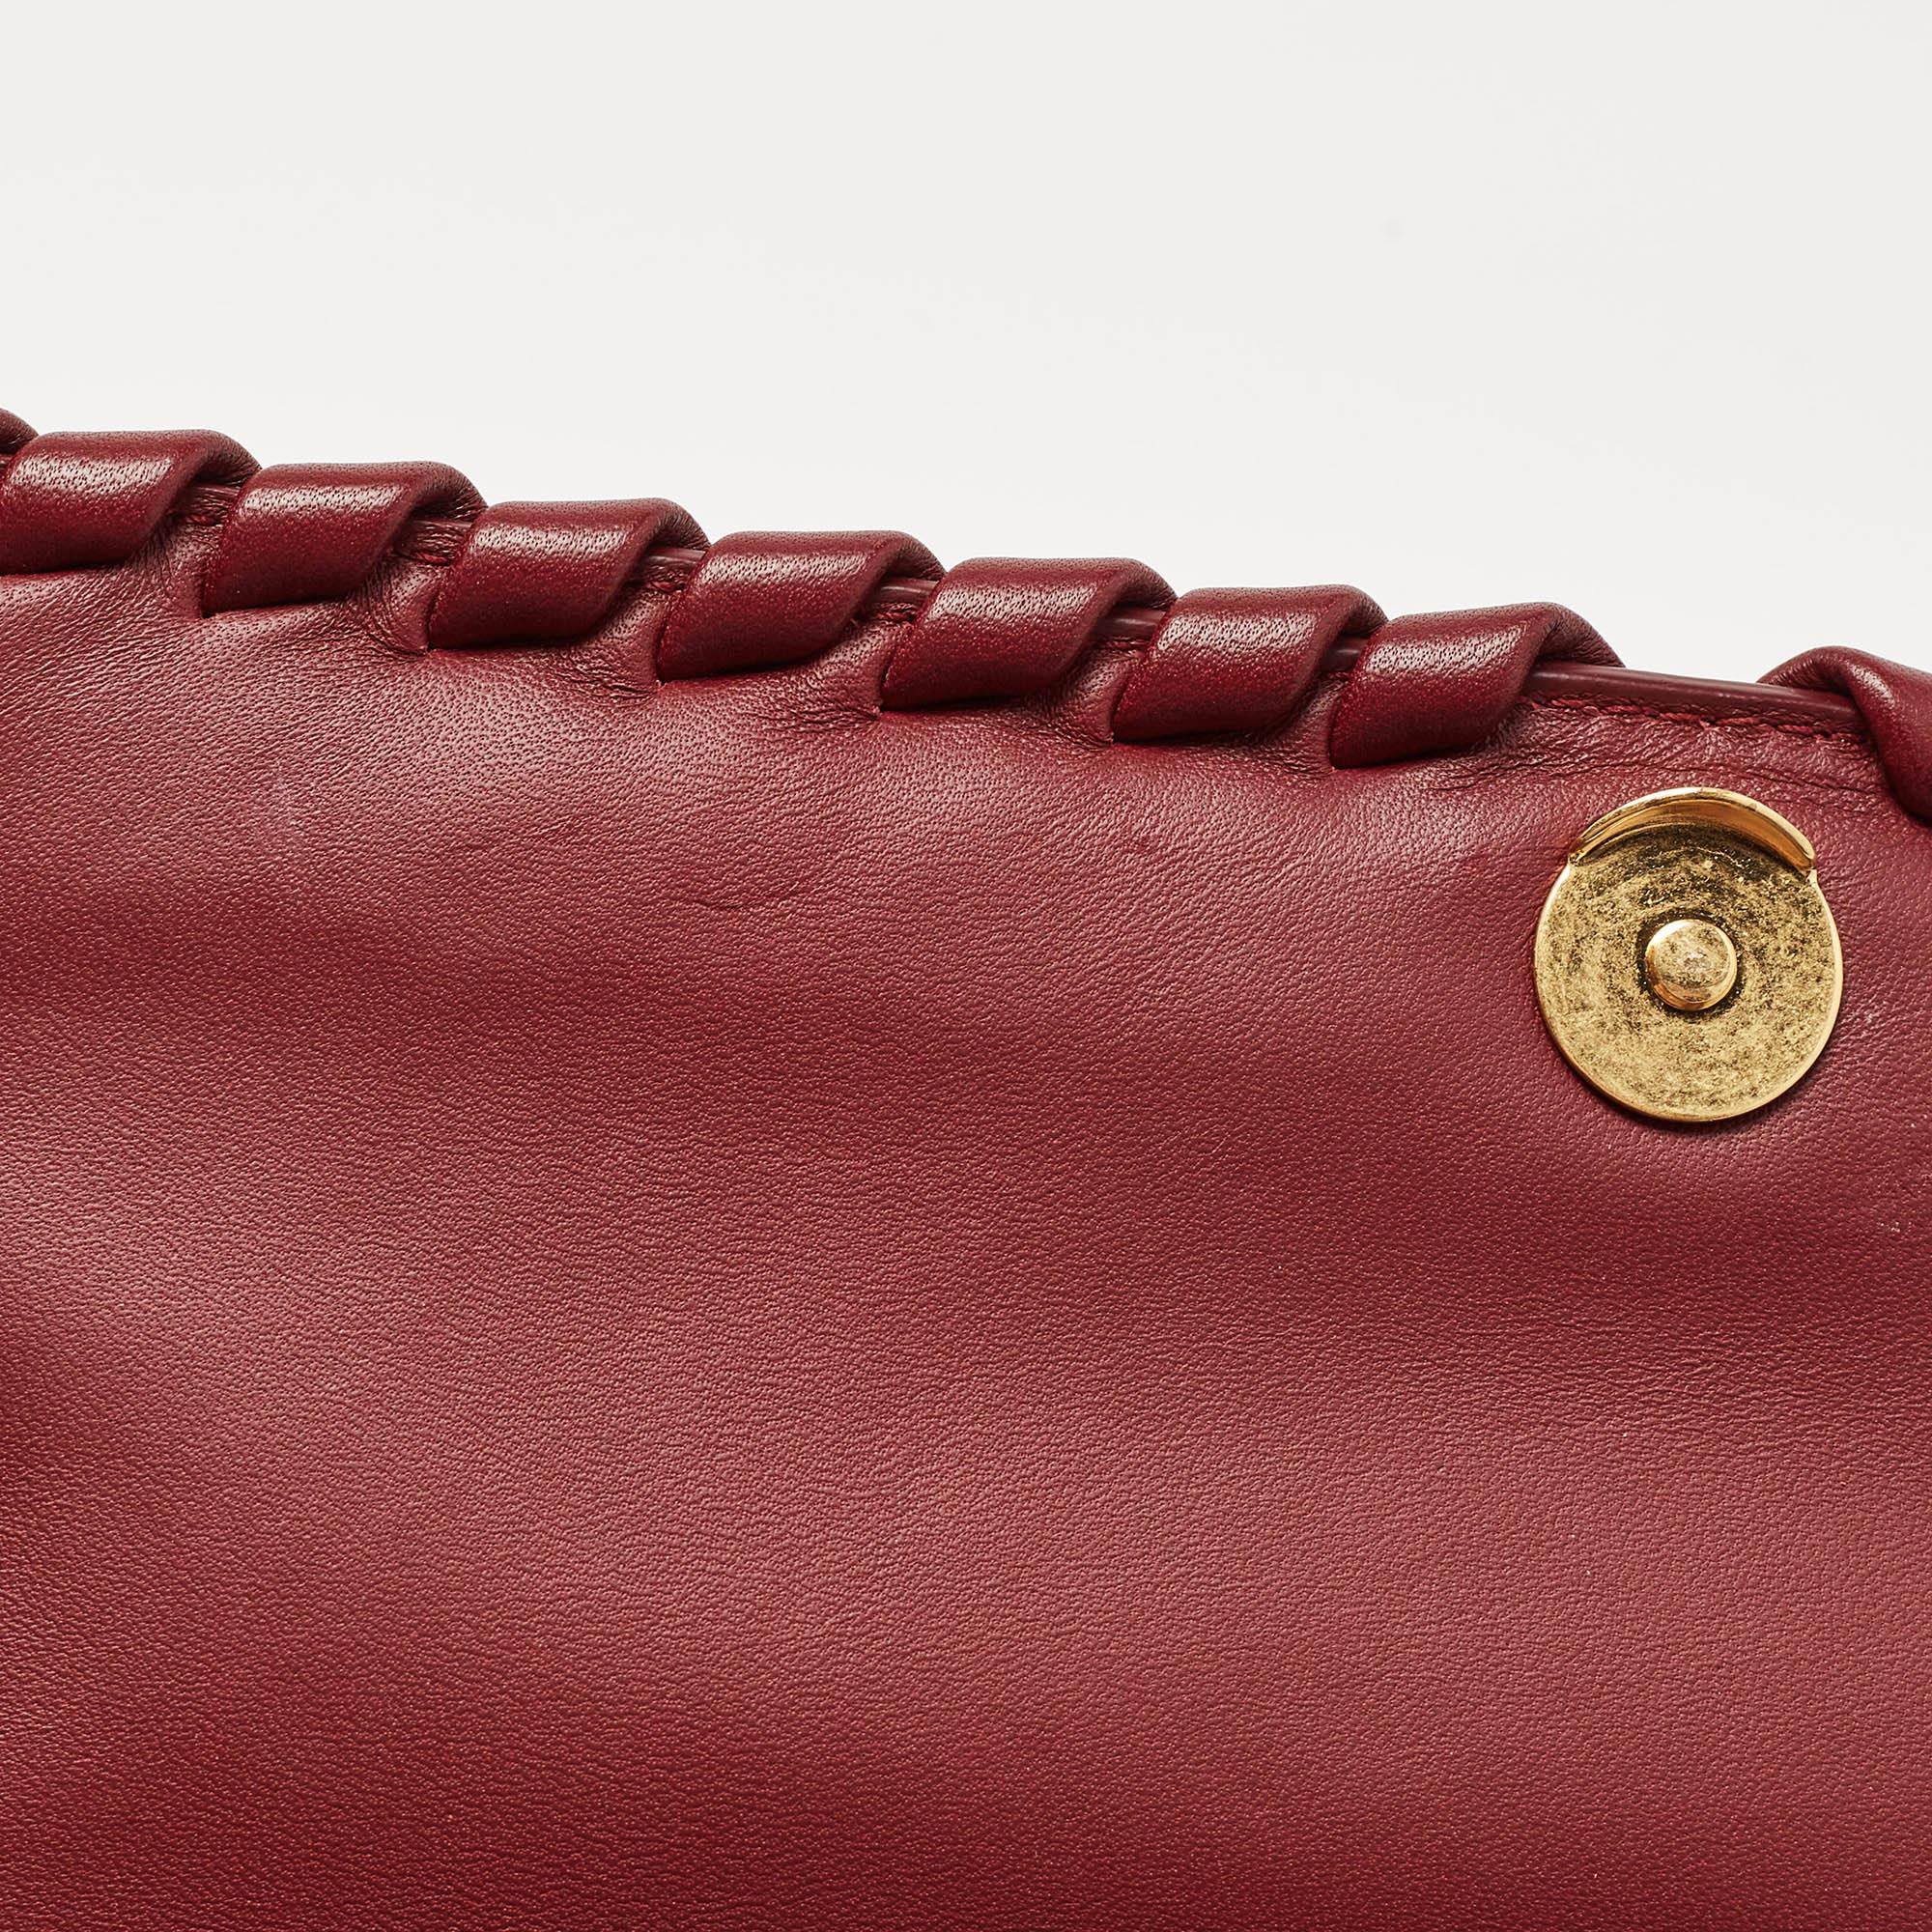 Bottega Veneta Dark Red Intrecciato Leather Small Olimpia Shoulder Bag For Sale 1